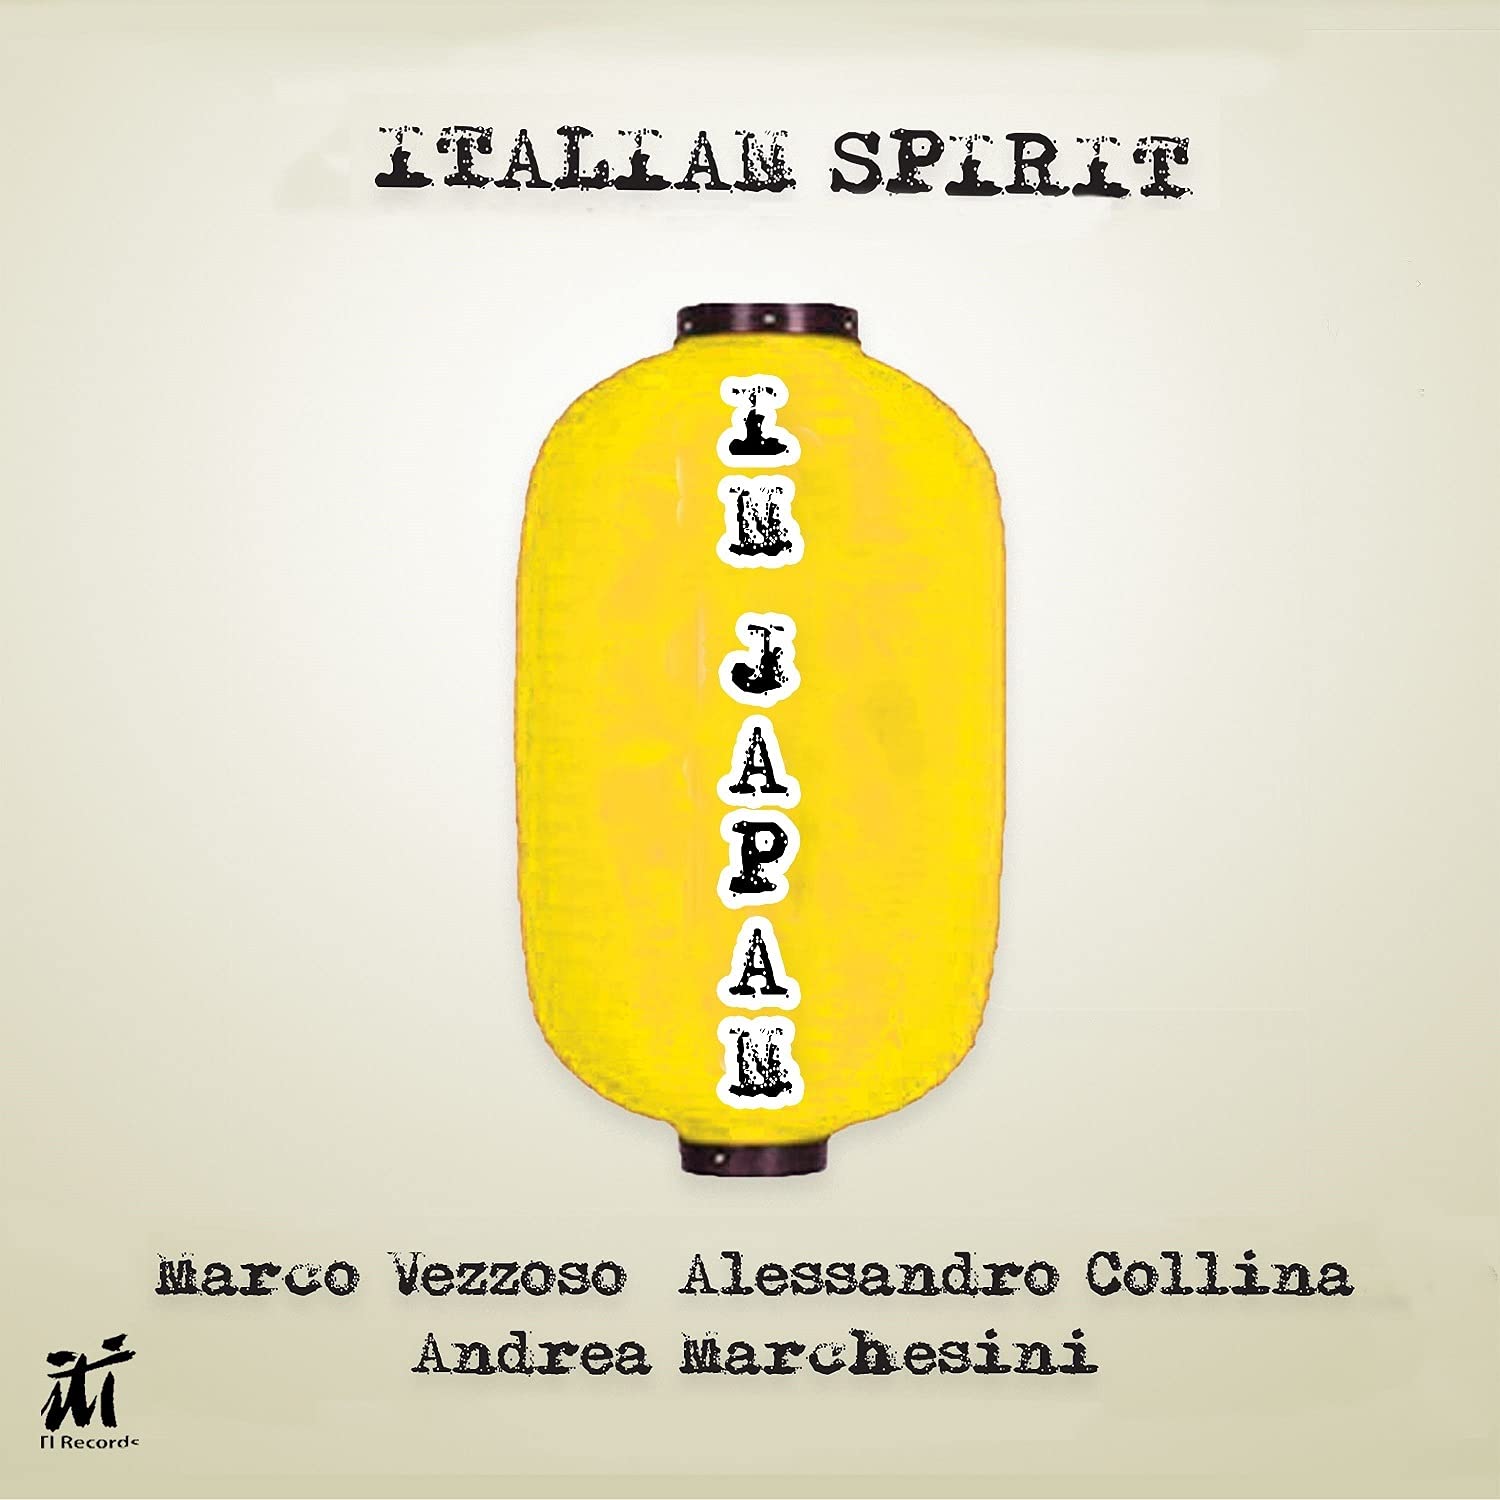 ITALIAN SPIRIT (MARCO VEZZOSO & ALESSANDRO COLLINA) - Marco Vezzoso, Alessandro Collina & Andrea Marchesini : Italian Spirit in Japan cover 